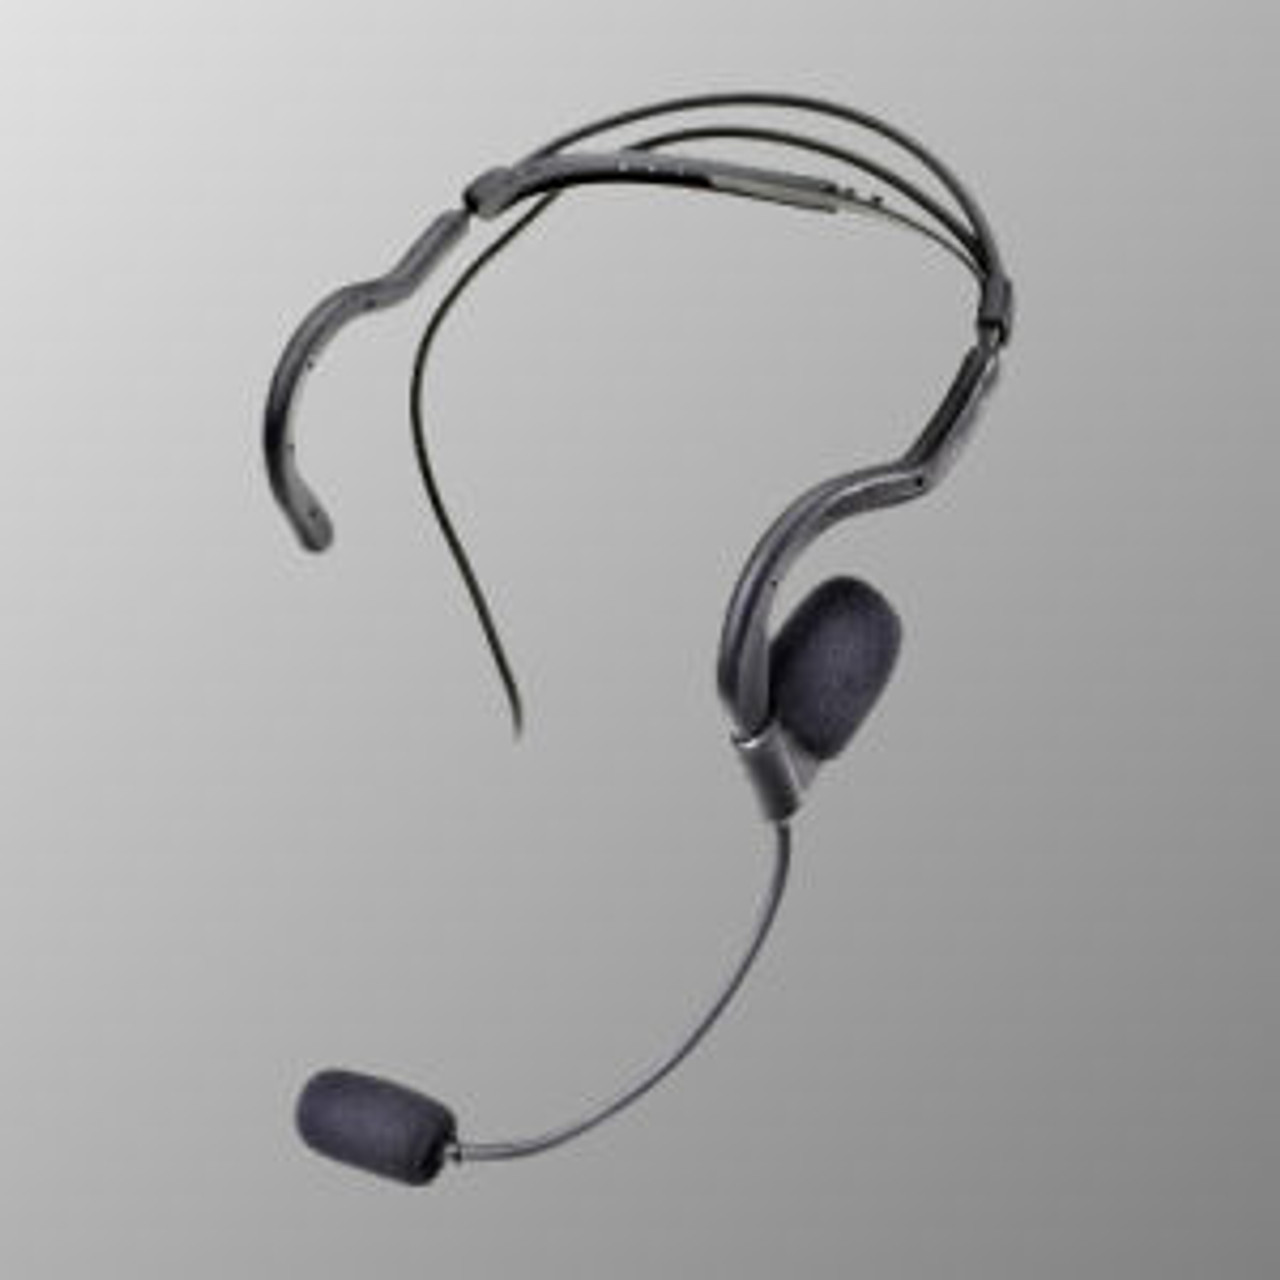 ICOM IC-F31 Tactical Noise Canceling Single Muff Headset